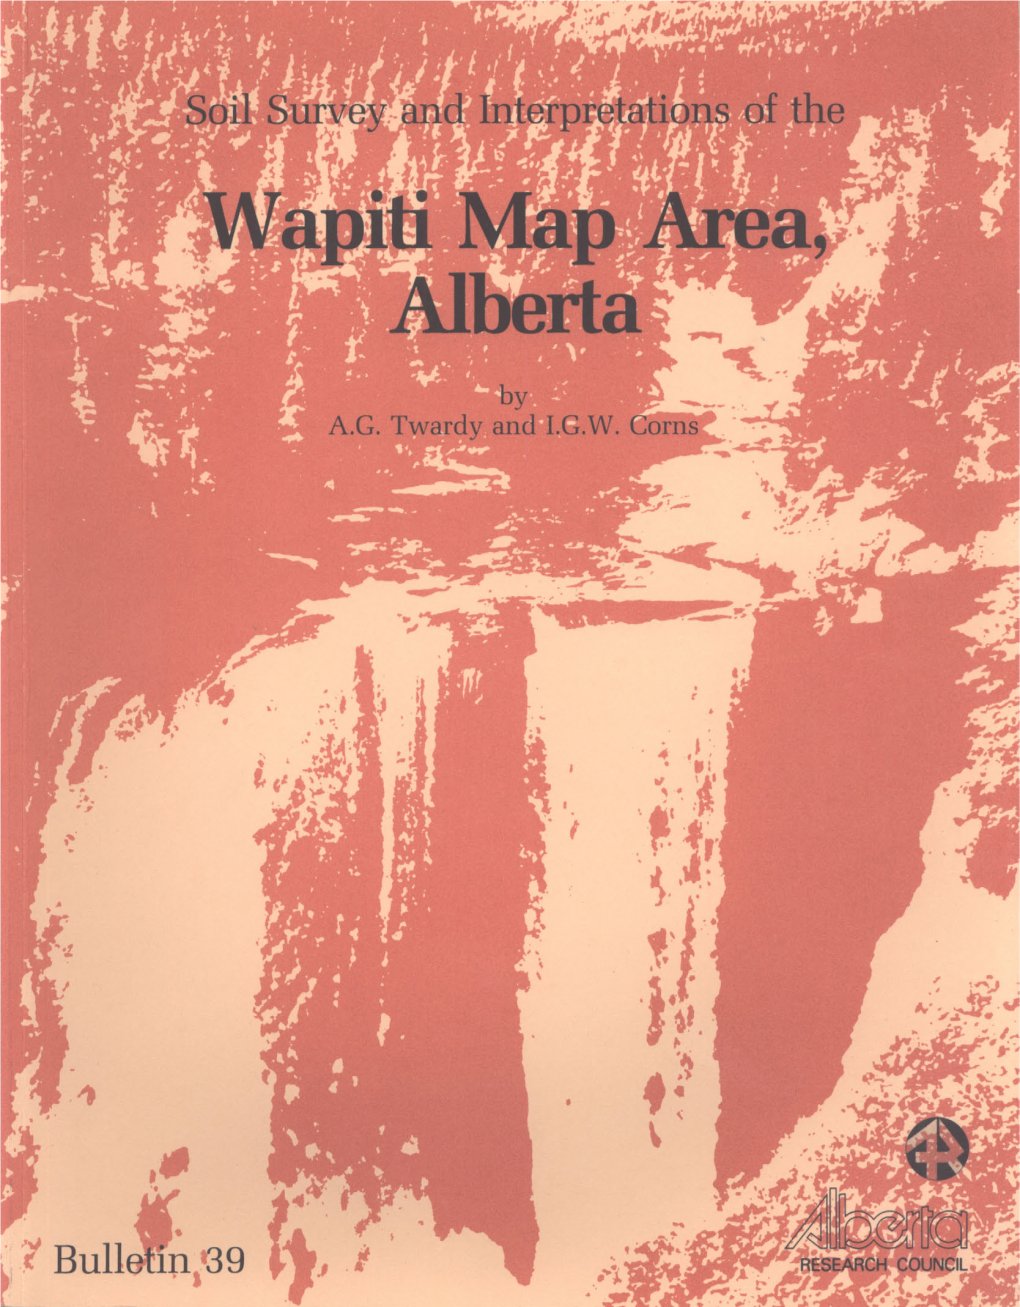 SOIL SURVEY and INTERPRETATIONS of the WAPITI MAP AREA, ALBERTA